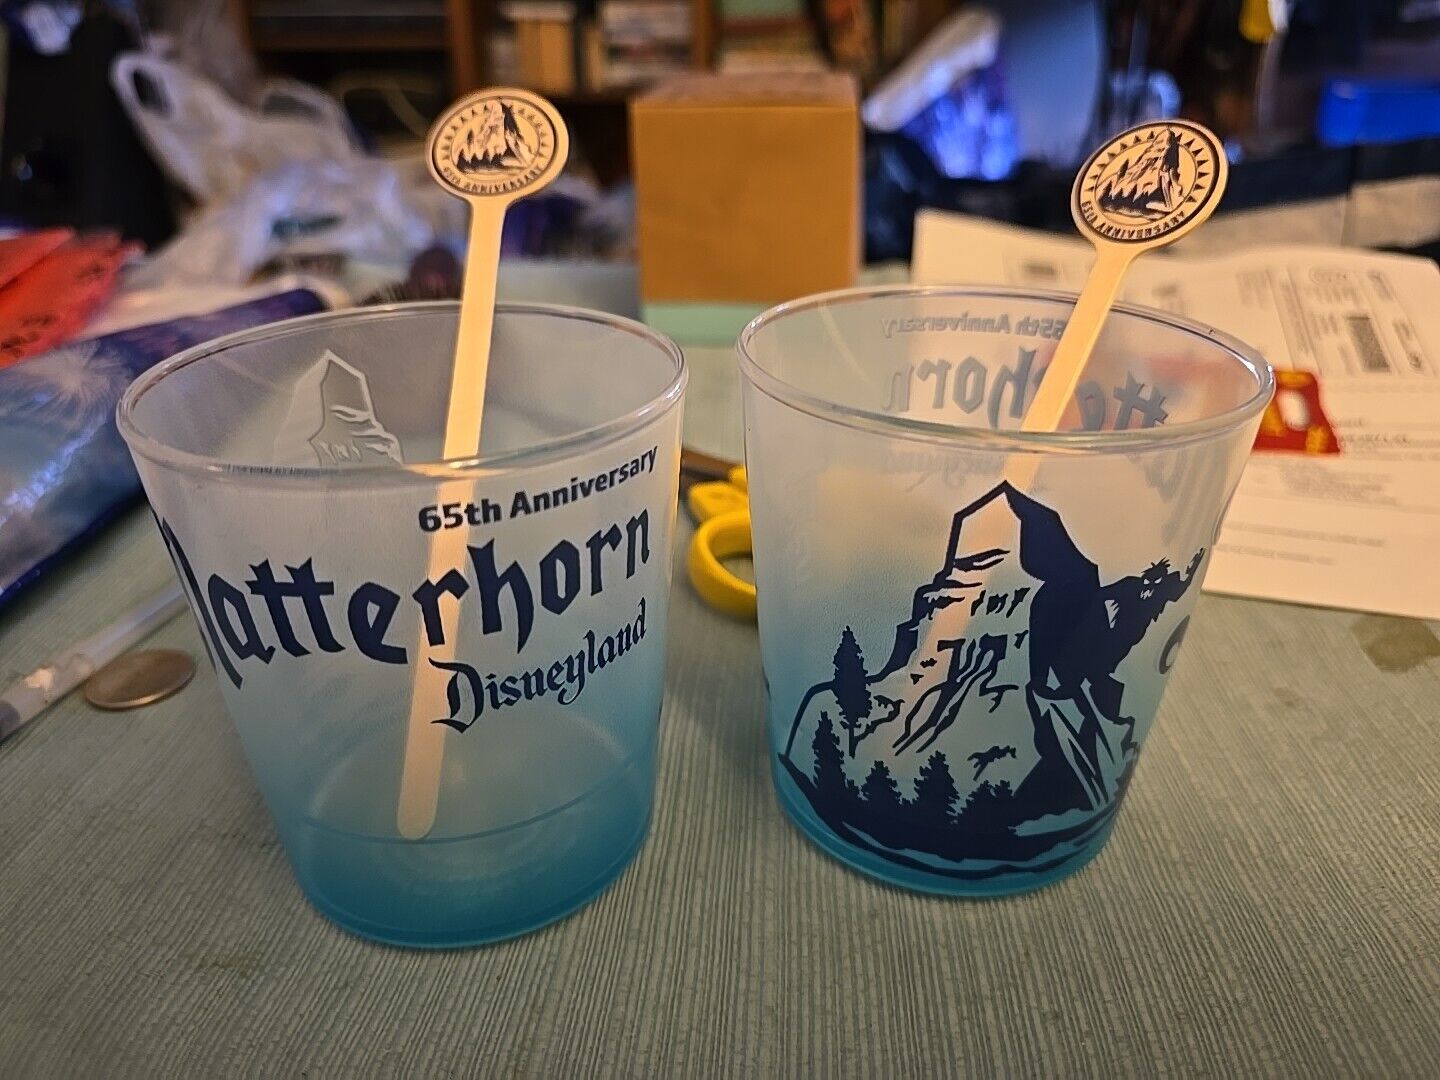  Disneyland Matterhorn 65th Anniversary Trader Sams Enchanted Tiki Bar Cup (1)